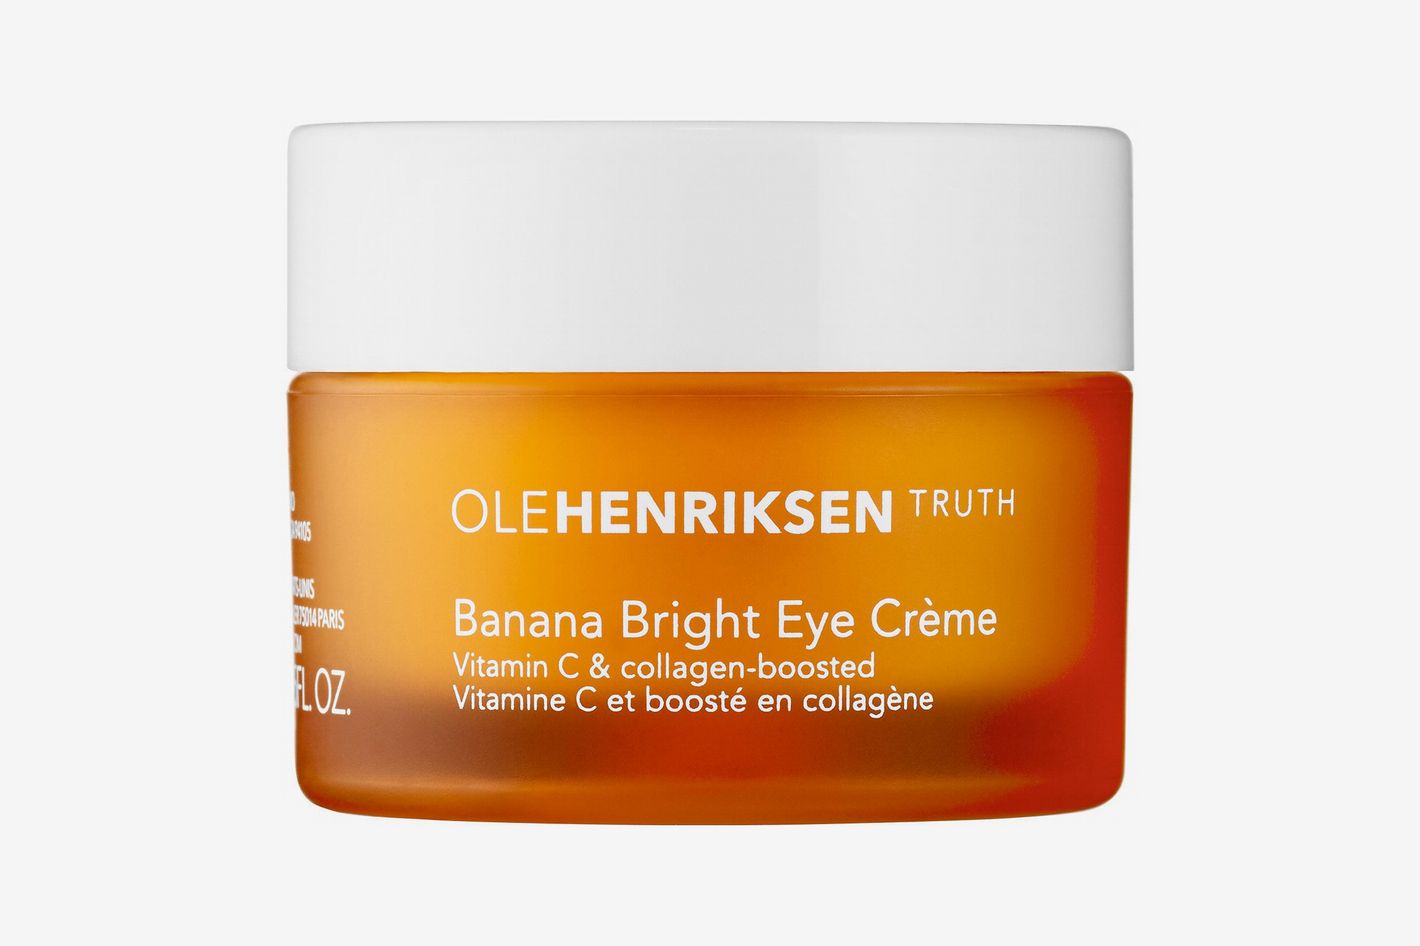 Ole Henriksen Banana Bright+ Eye Crème Got a Major Upgrade – SheKnows